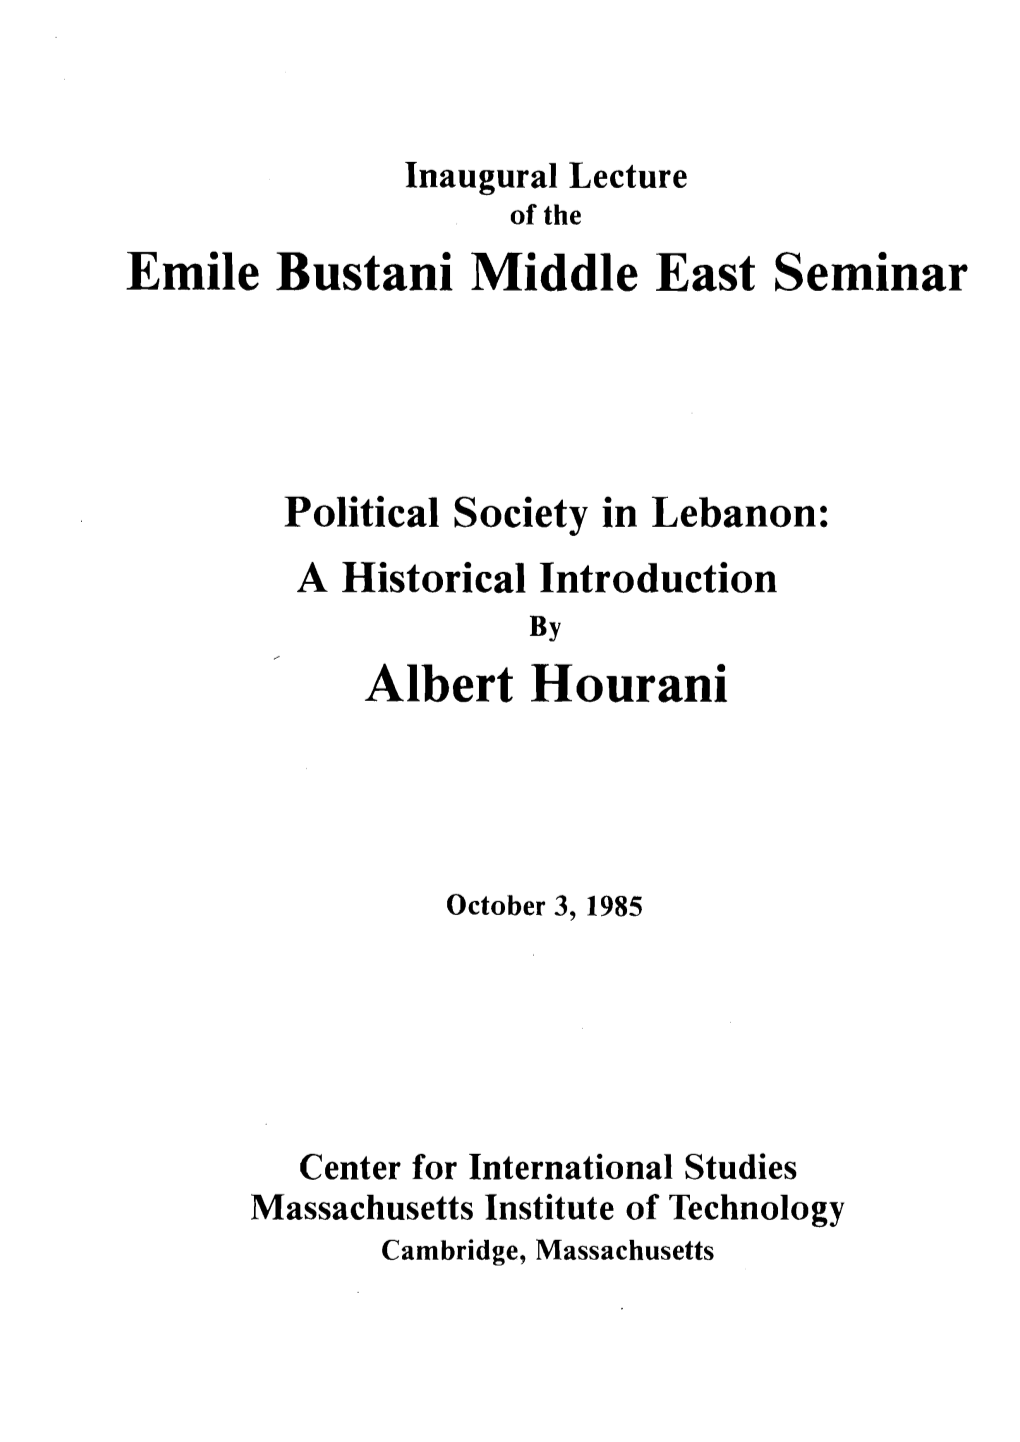 Emile Bustani Middle East Seminar Albert Hourani